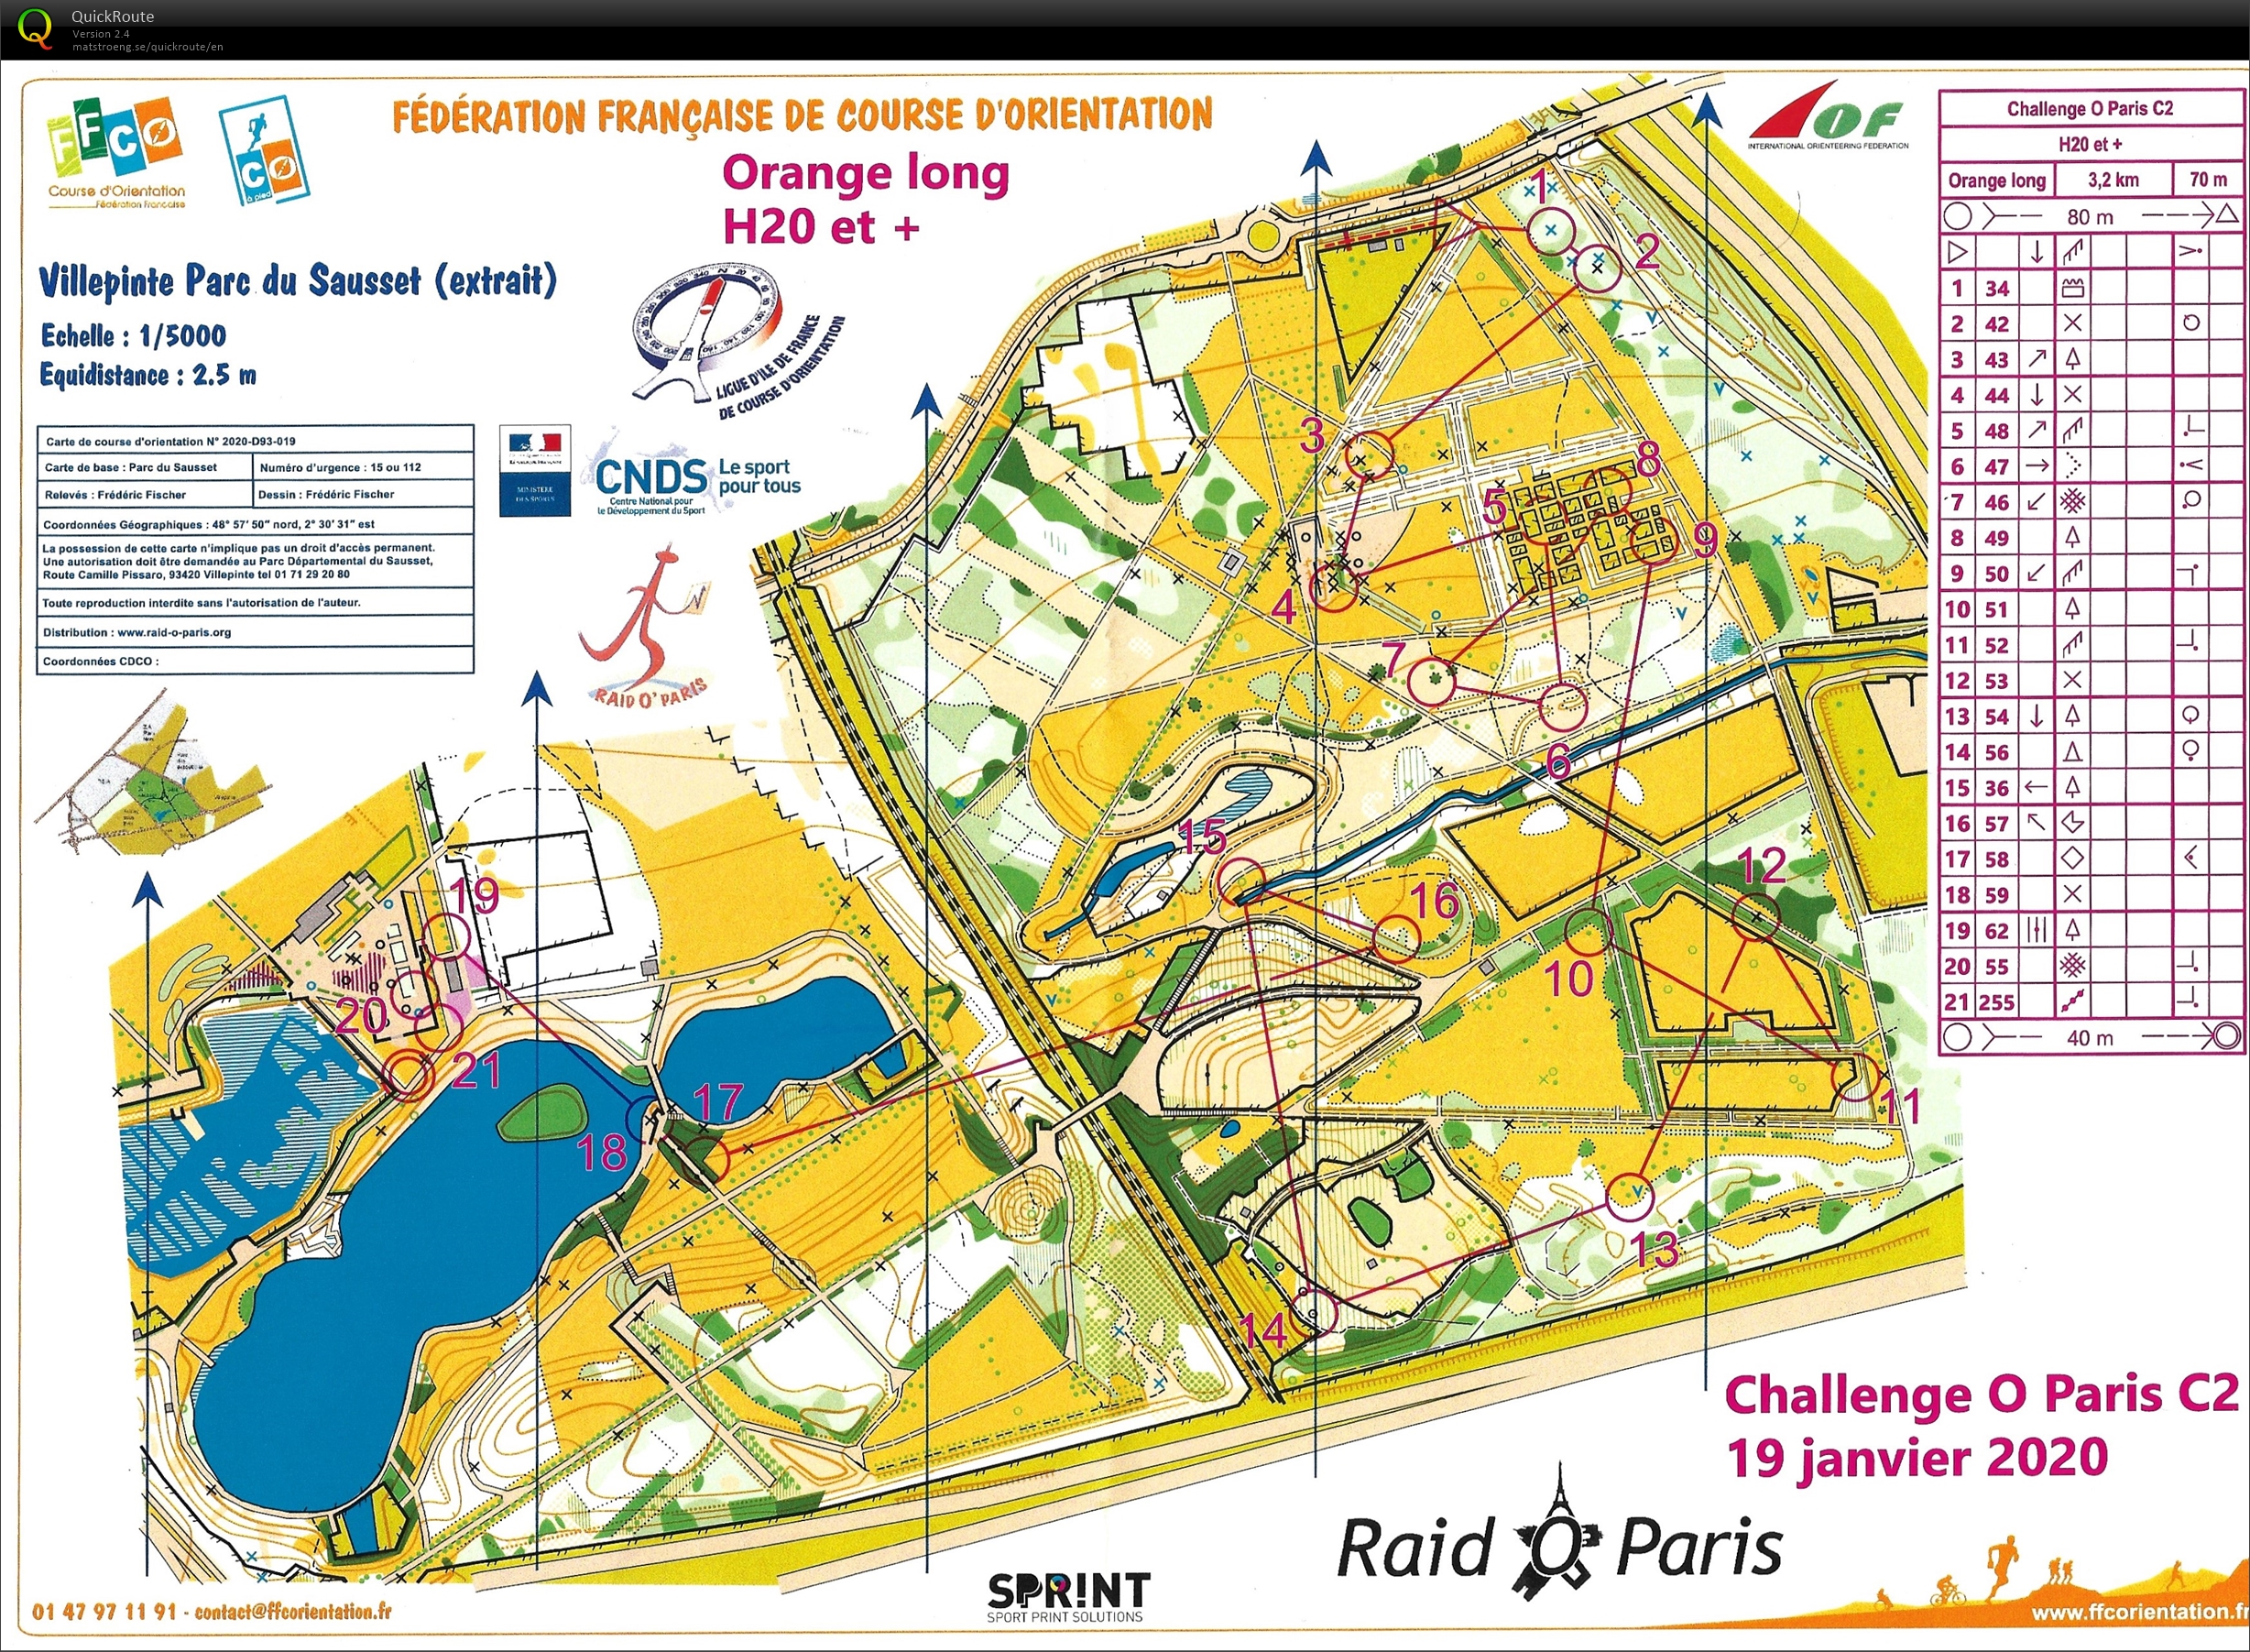 Challenge O Paris C2 Sprint (19-01-2020)